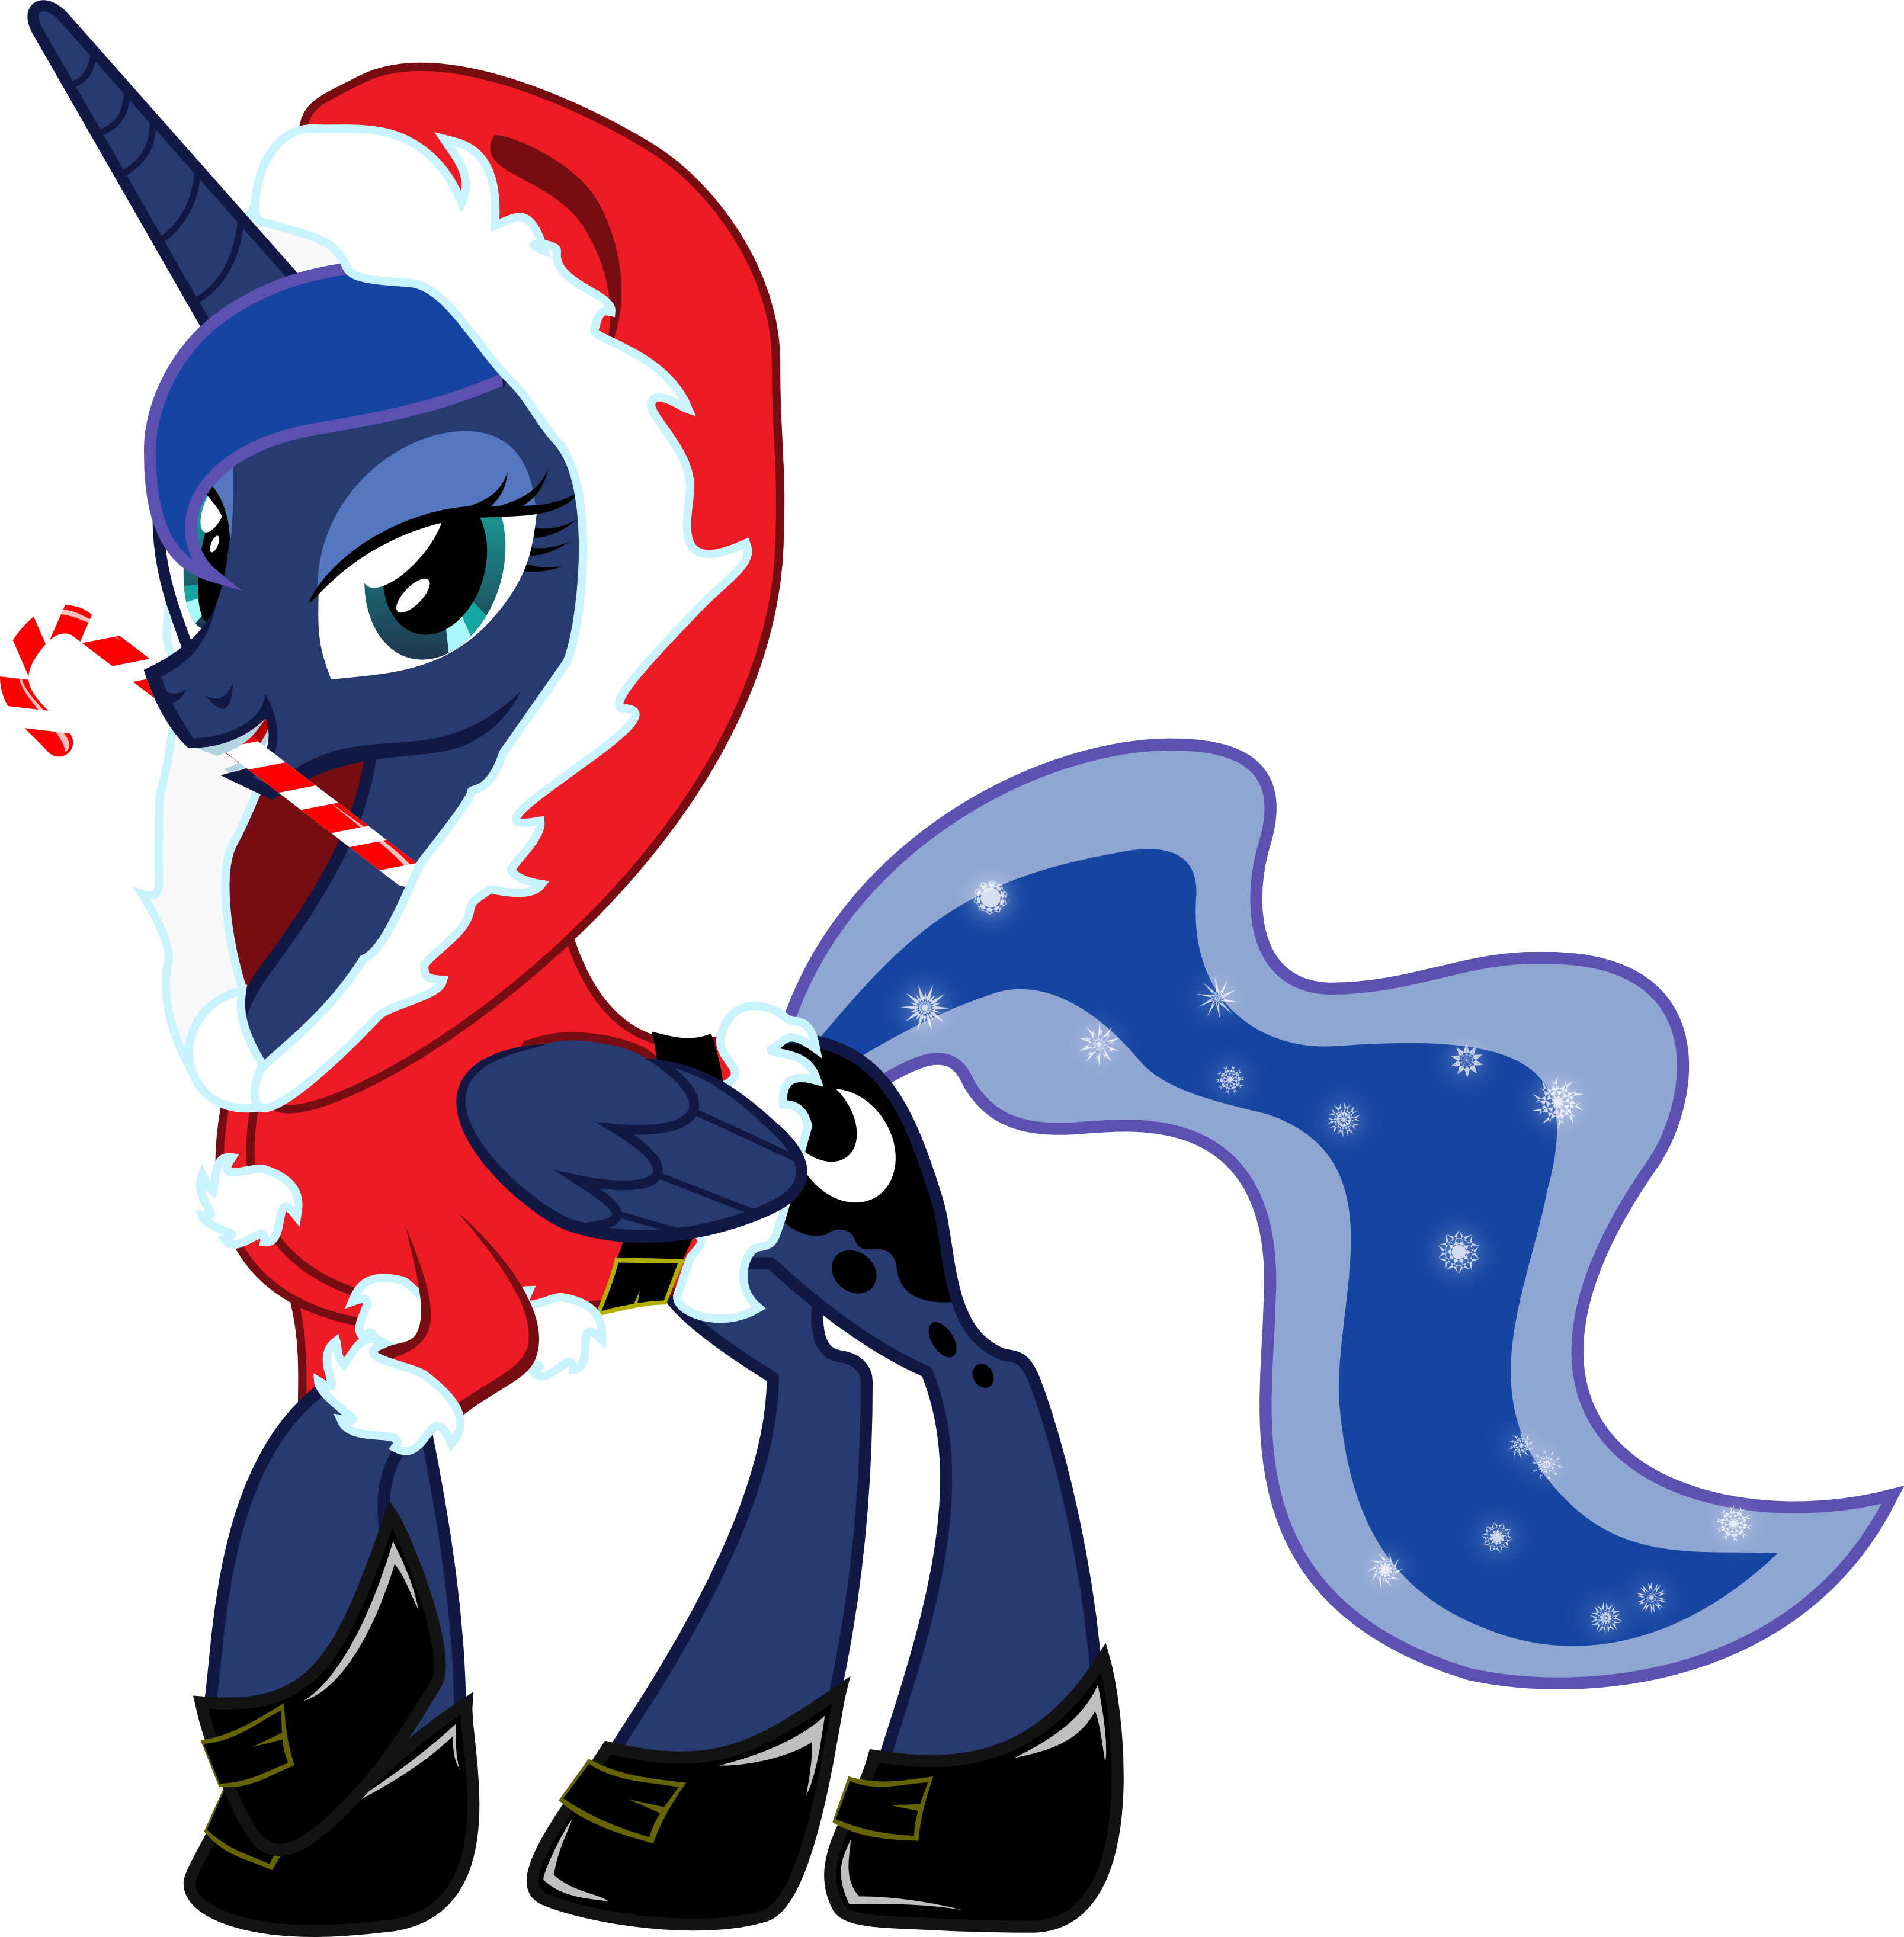 Princess_Luna_Christmas_Pony_by_artist-up1ter.png